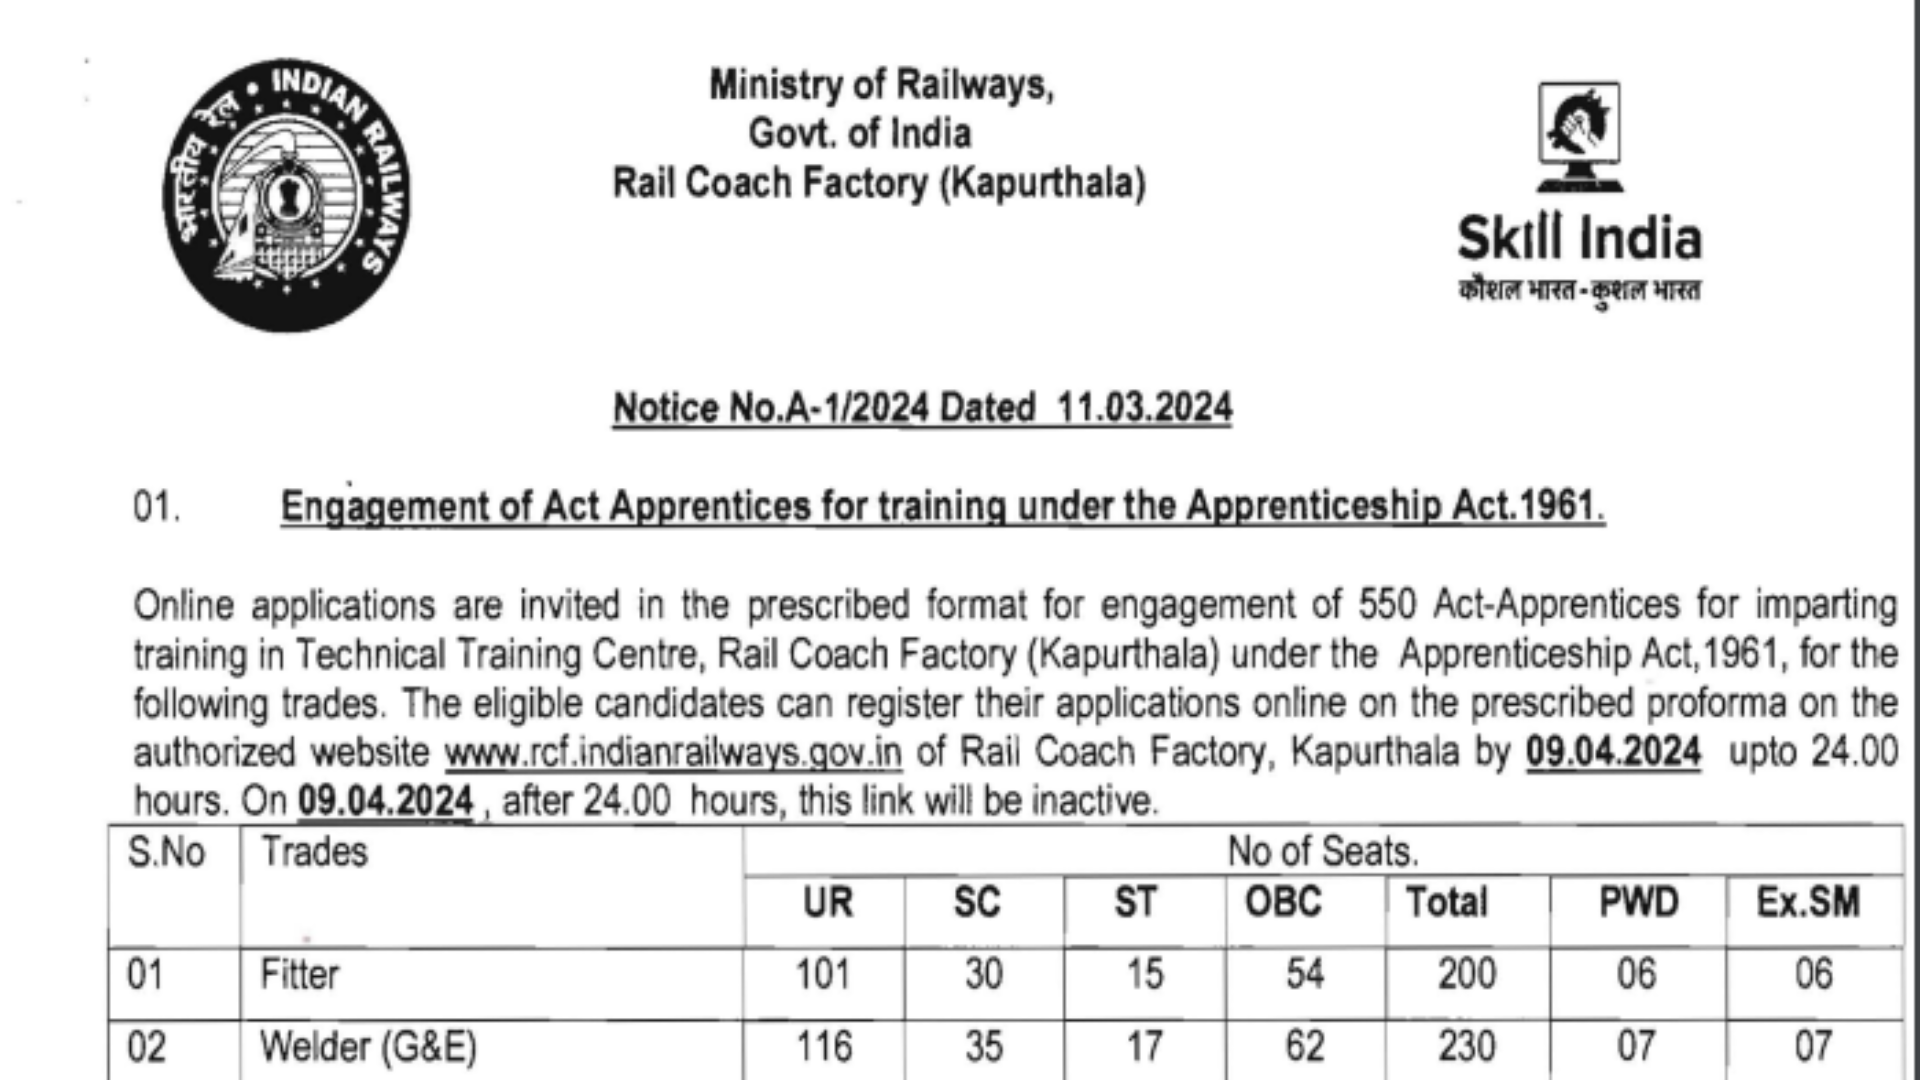 RCF Kapurthala Apprentice Recruitment 2024